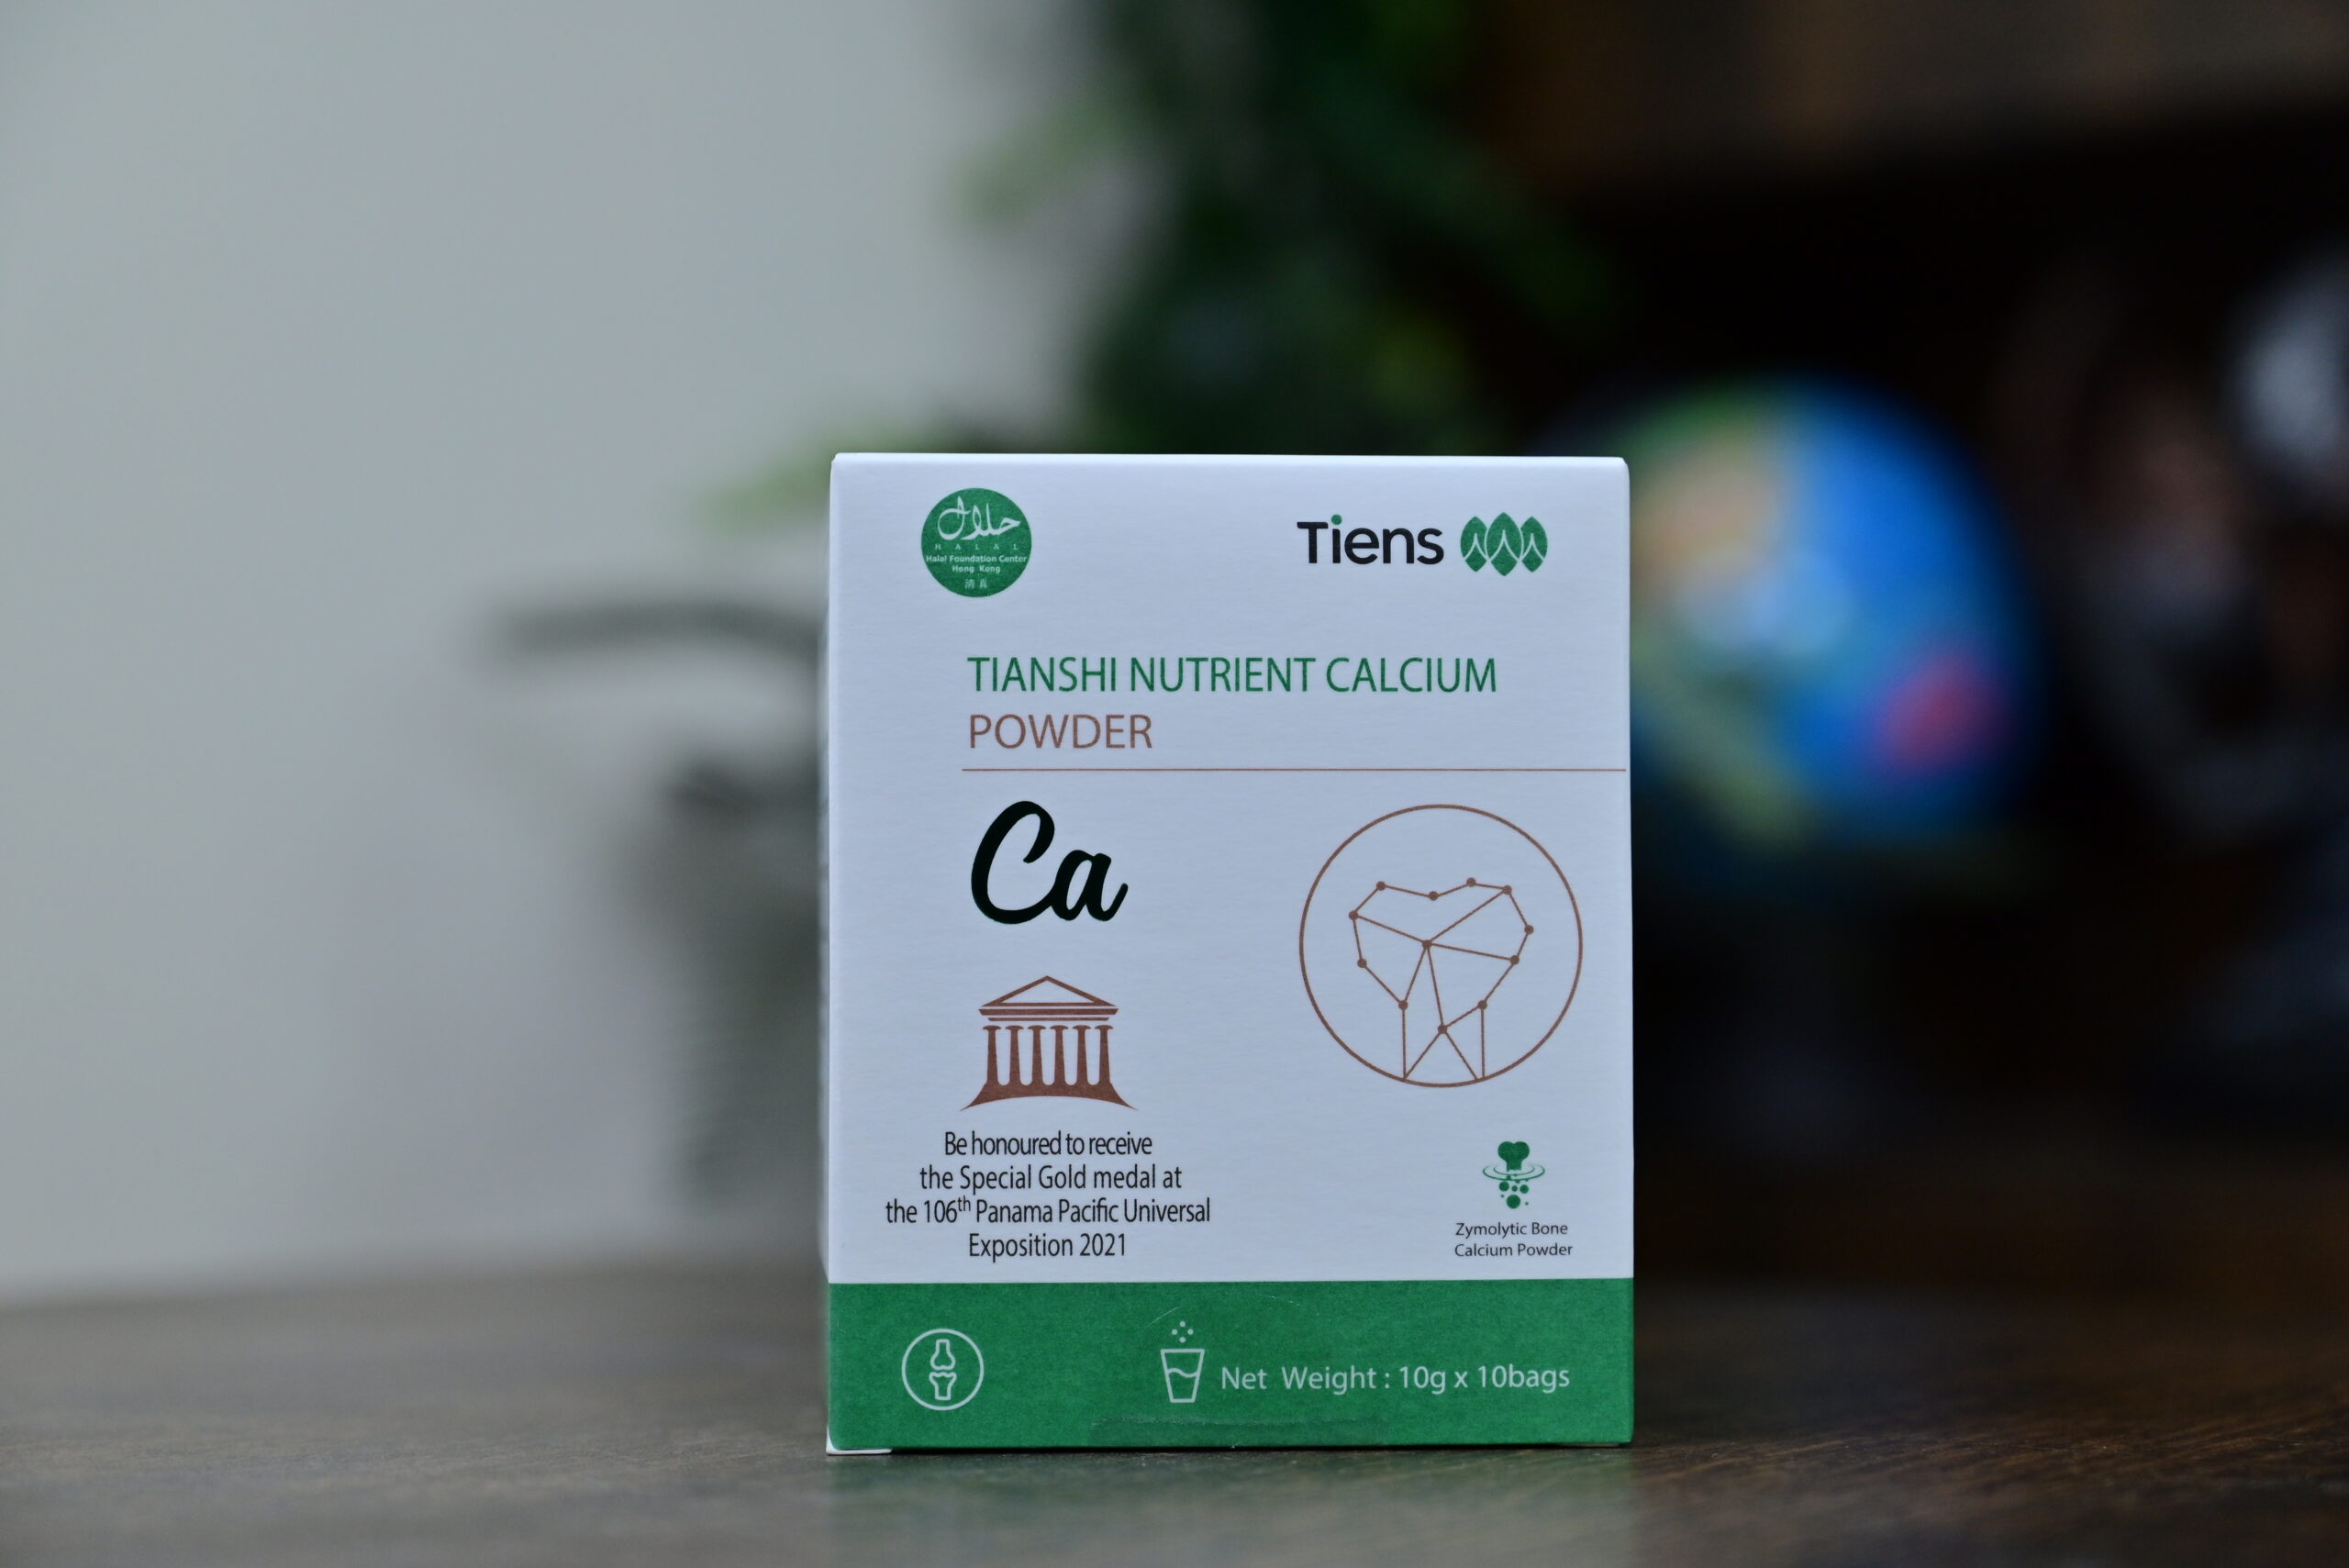 Tianshi Nutrient Calcium Powder – Tiens Infinity